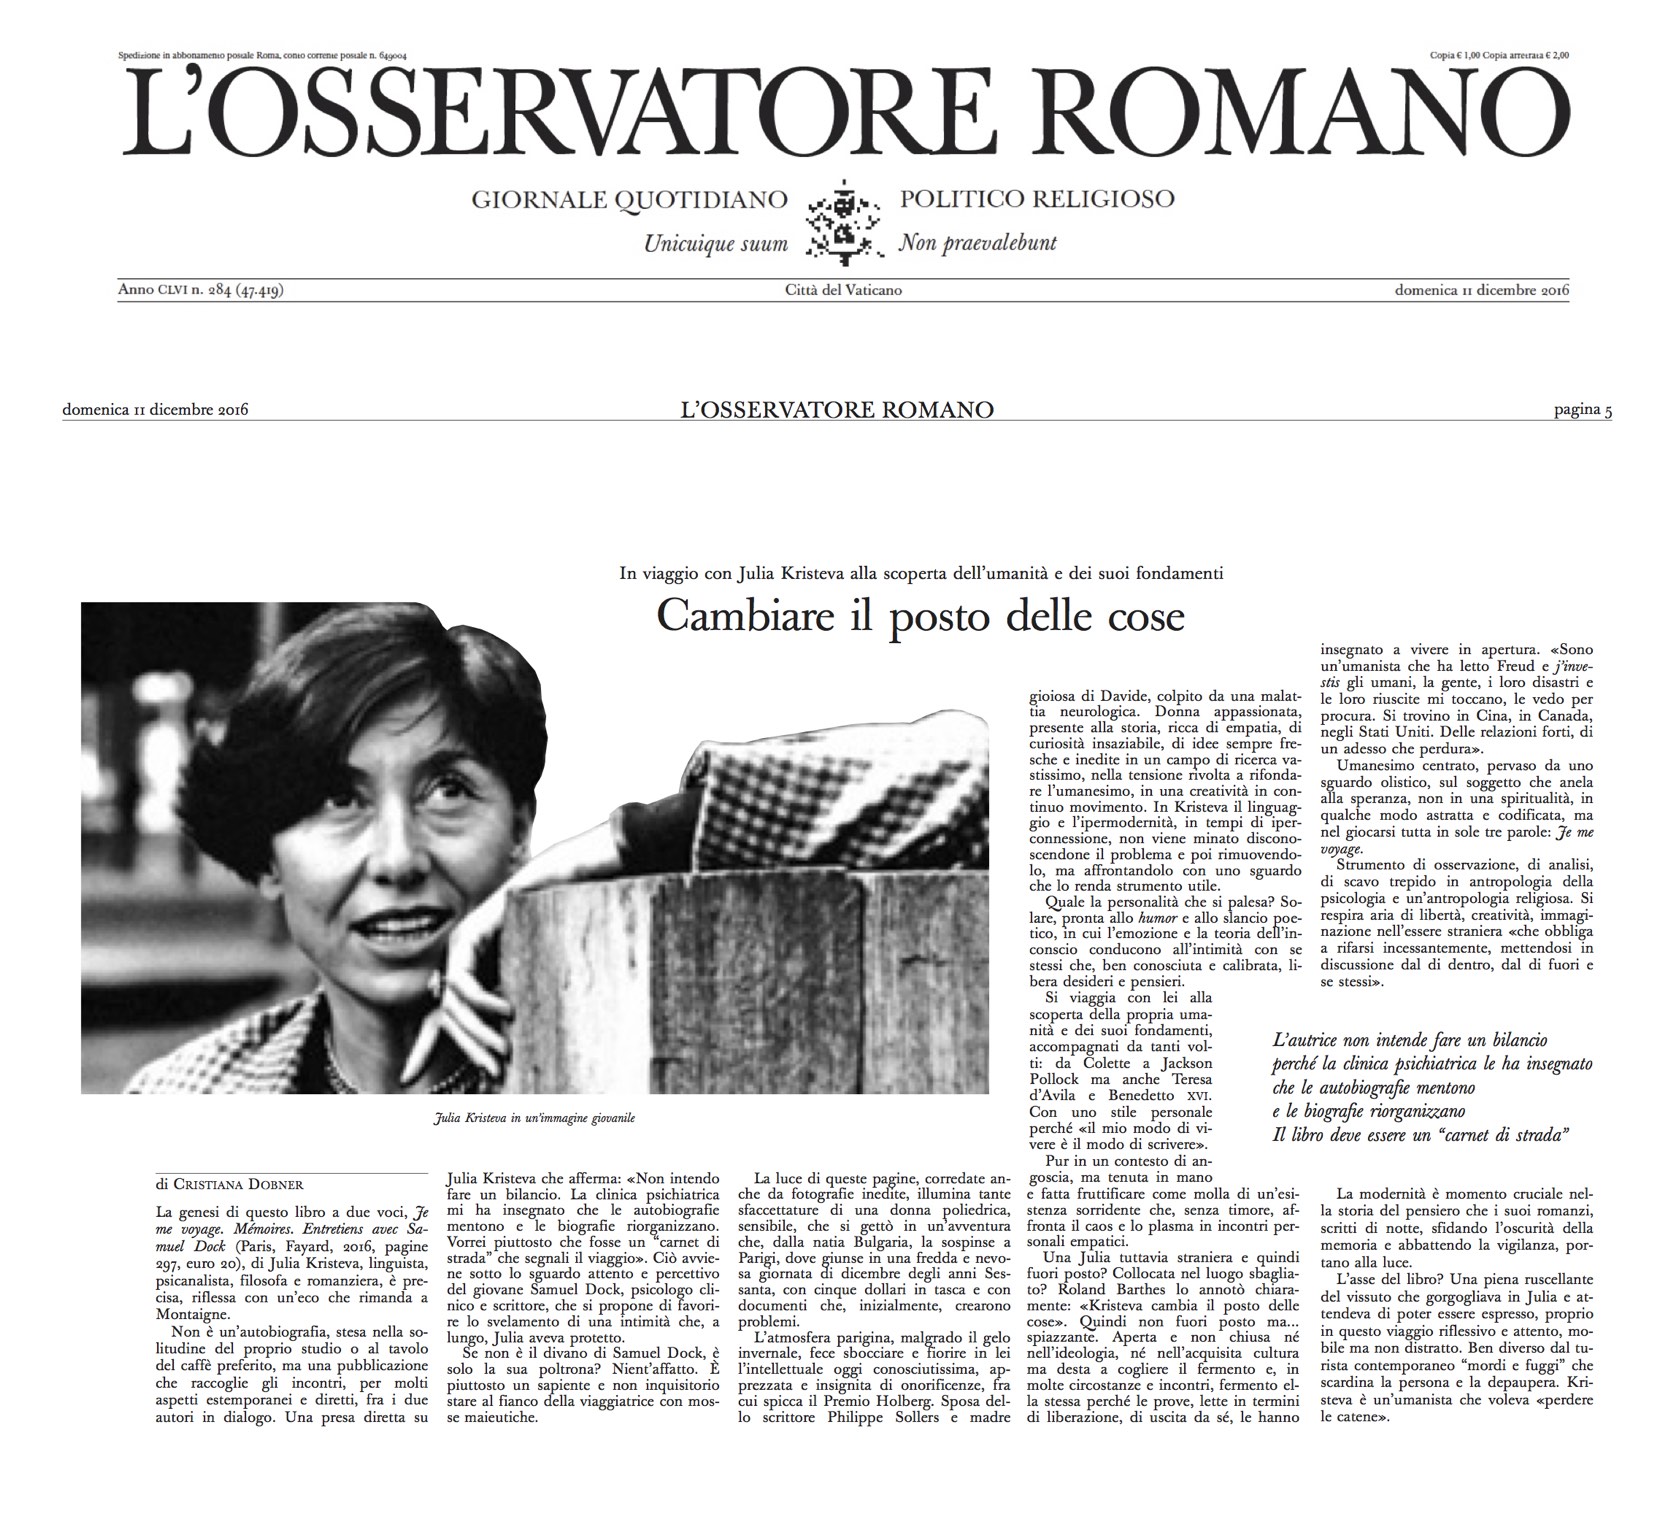 Julia Kristeva - Je me voyage, article dans L'Osservatore Romano